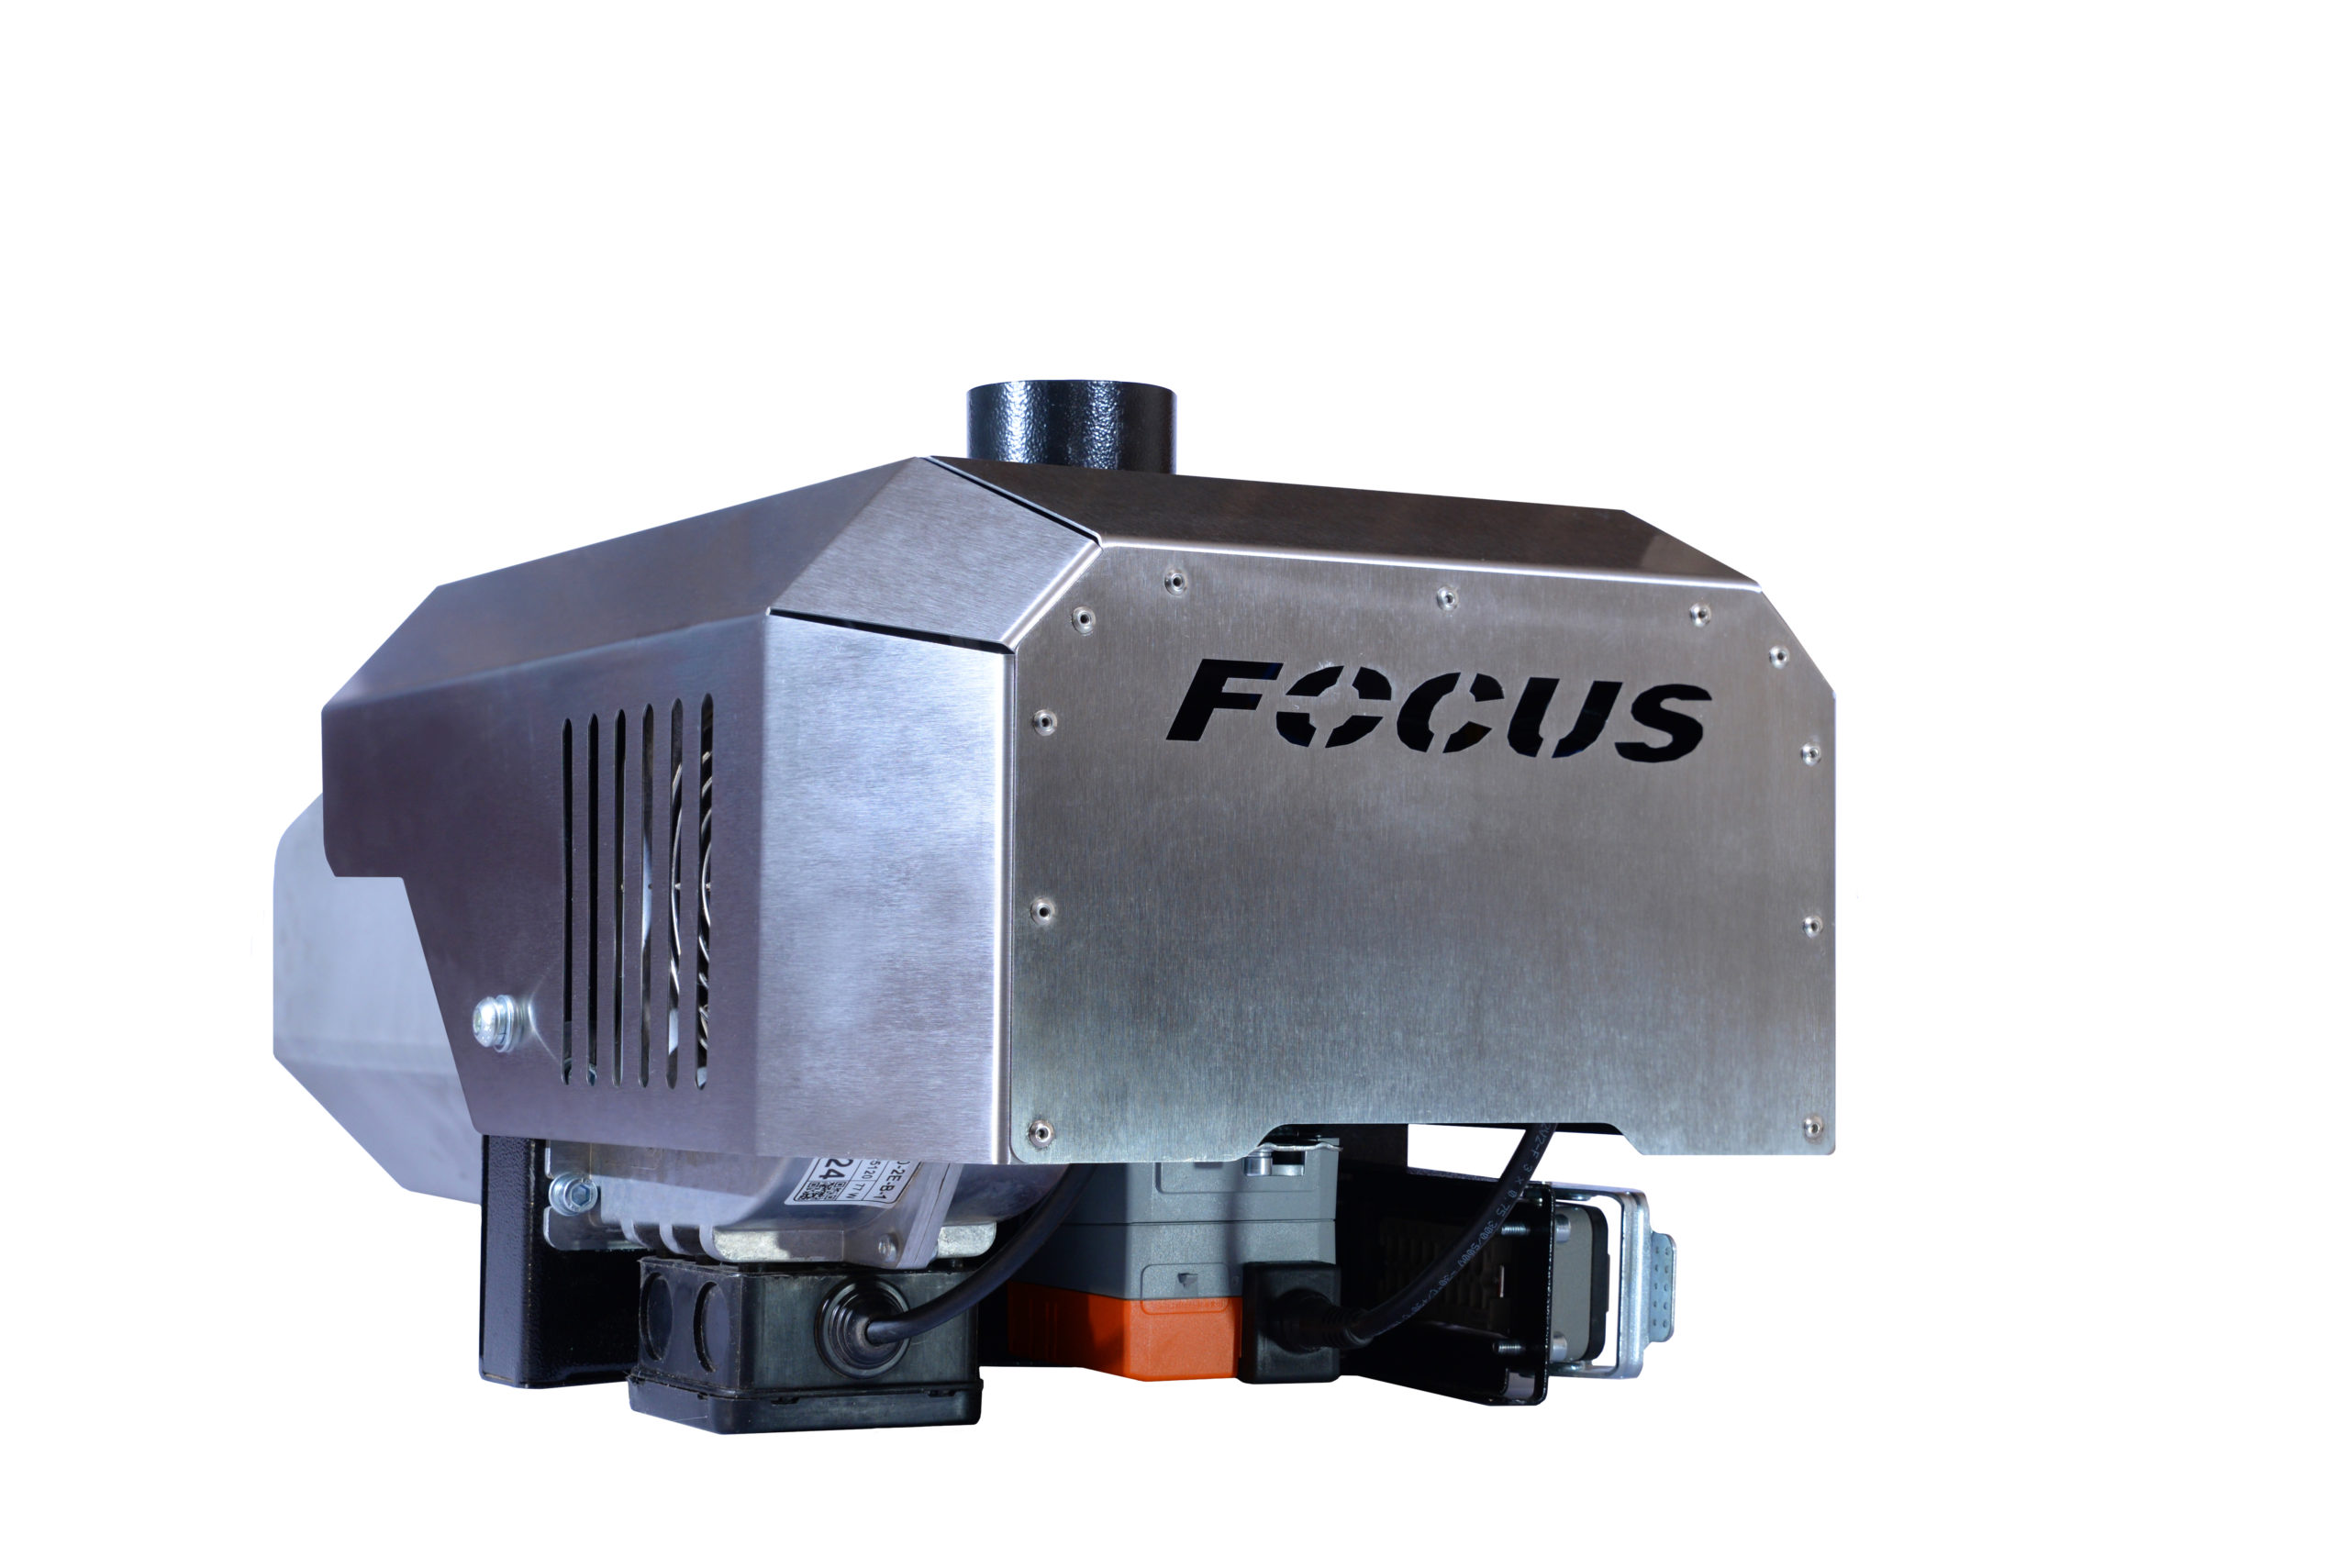 Výroba topné techniky FOCUS - Firebox - Kotle na tuhá paliva na pelety, hořáky na pelety, průmyslové